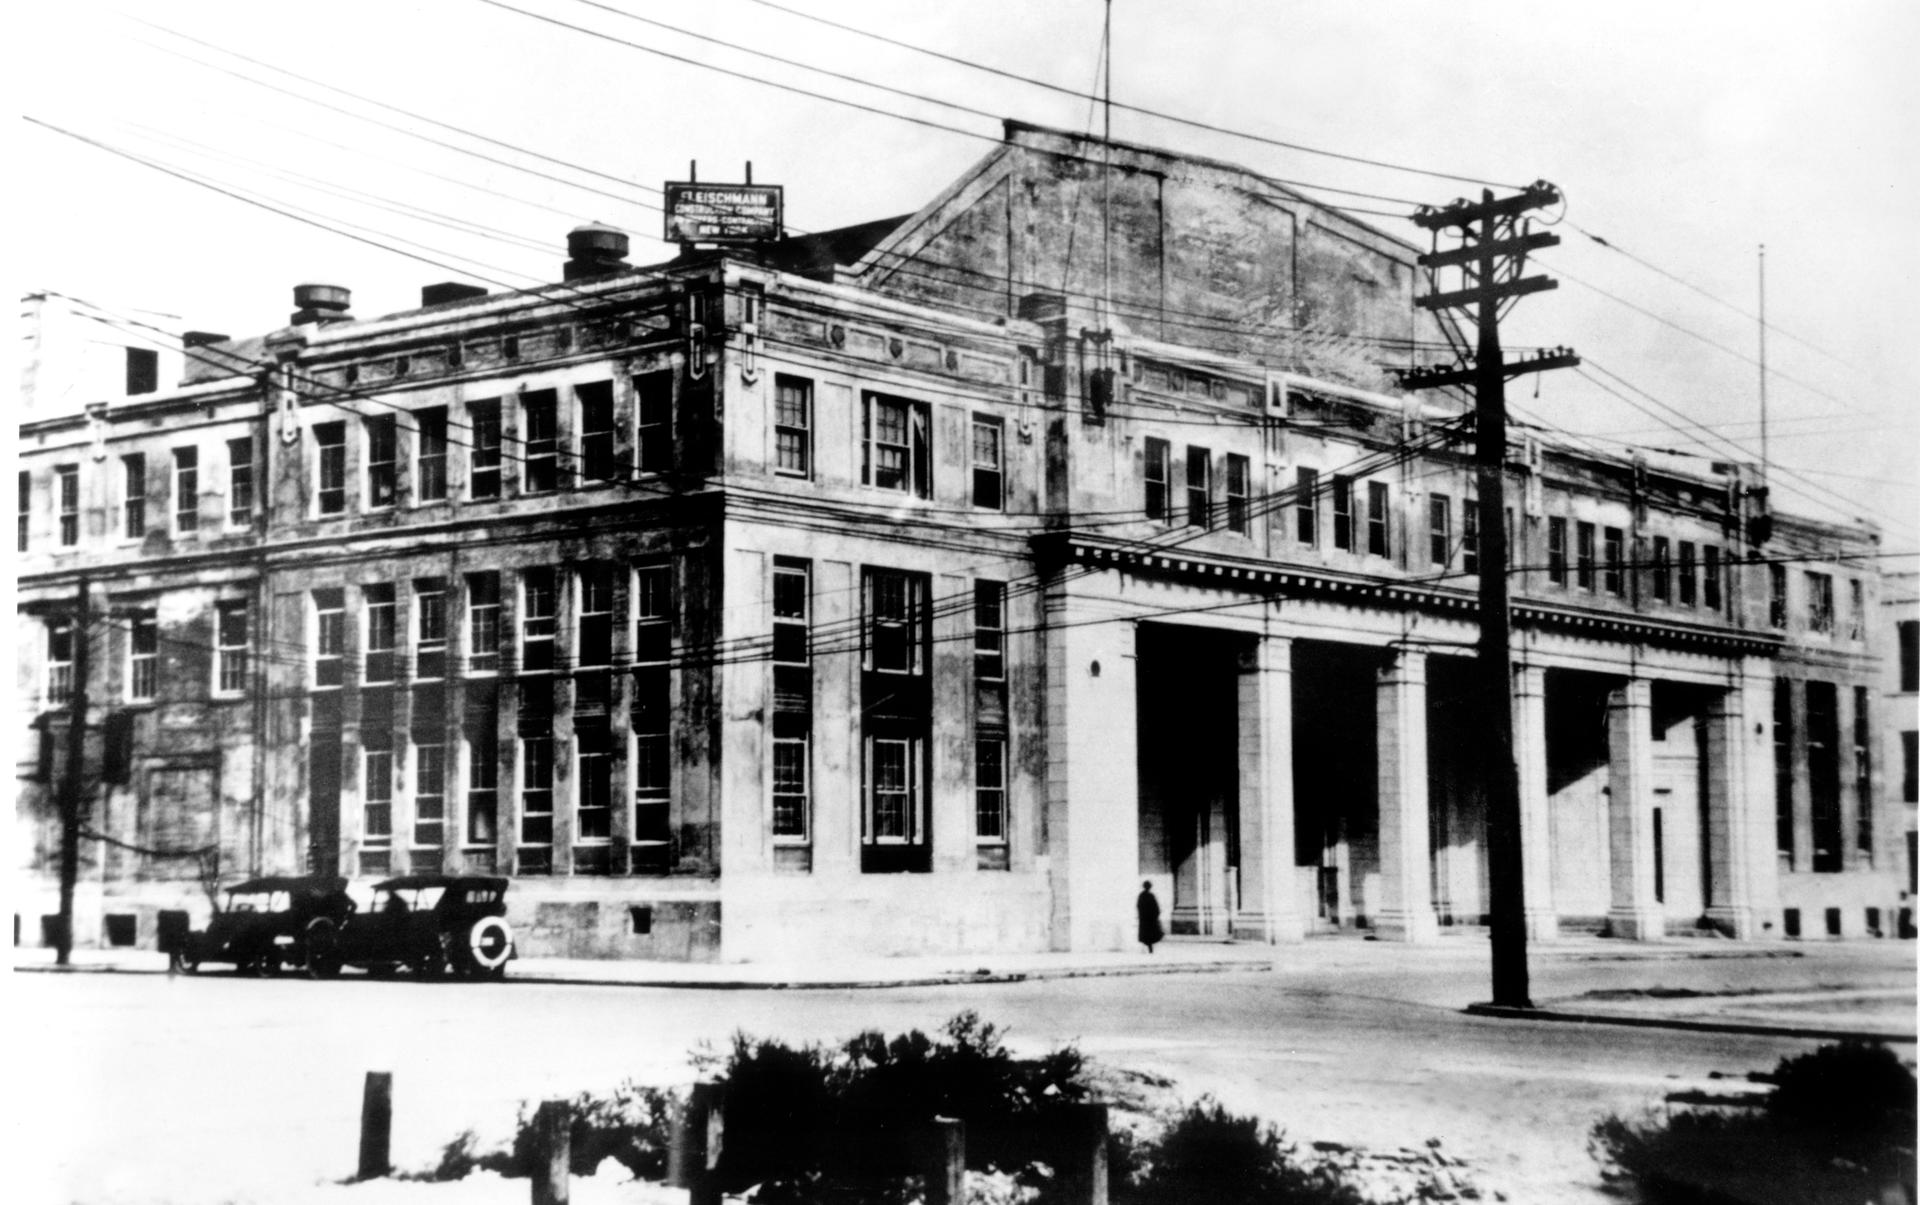 Paramount Pictures Astoria studio building in 1928. Photographer unknown.